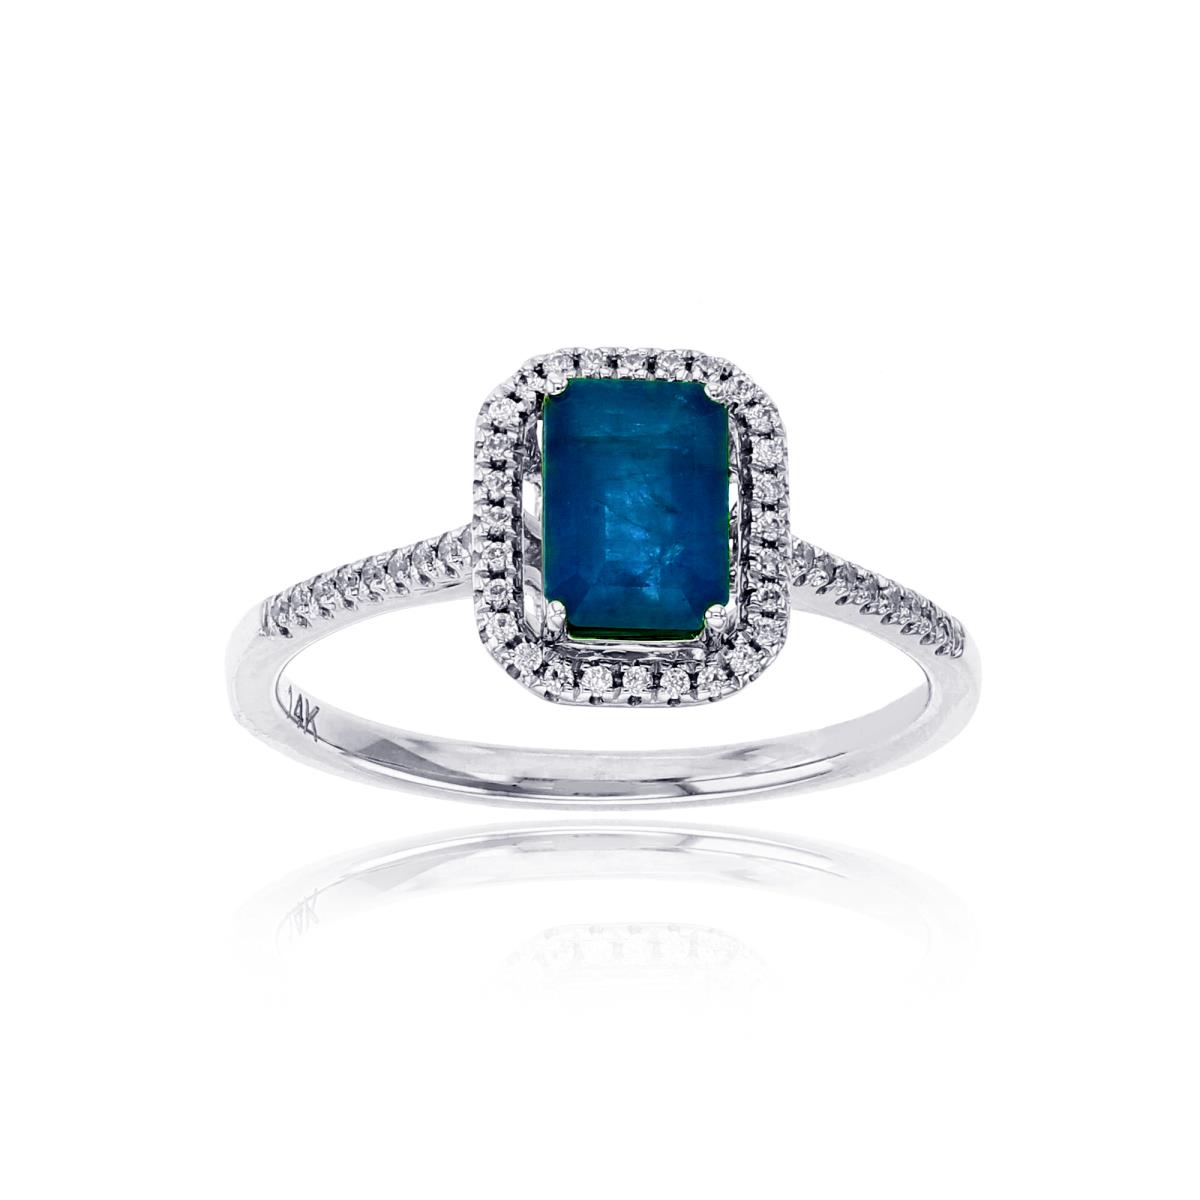 10K White Gold 0.14cttw Rnd Diamonds & 7x5mm Oct Sapphire Halo Ring